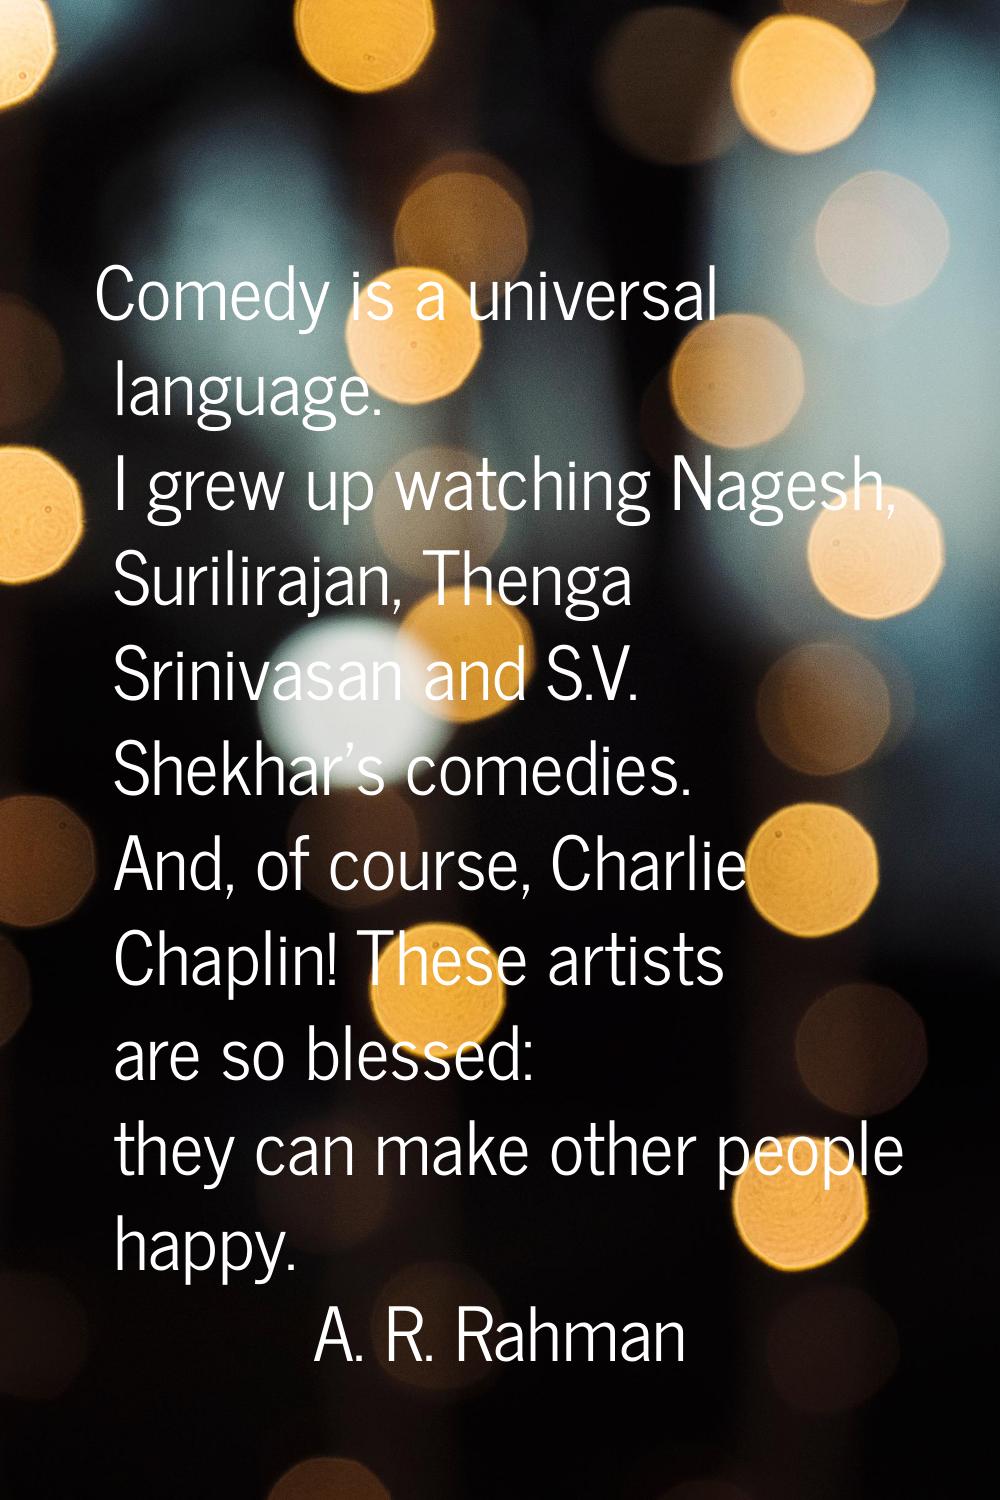 Comedy is a universal language. I grew up watching Nagesh, Surilirajan, Thenga Srinivasan and S.V. 